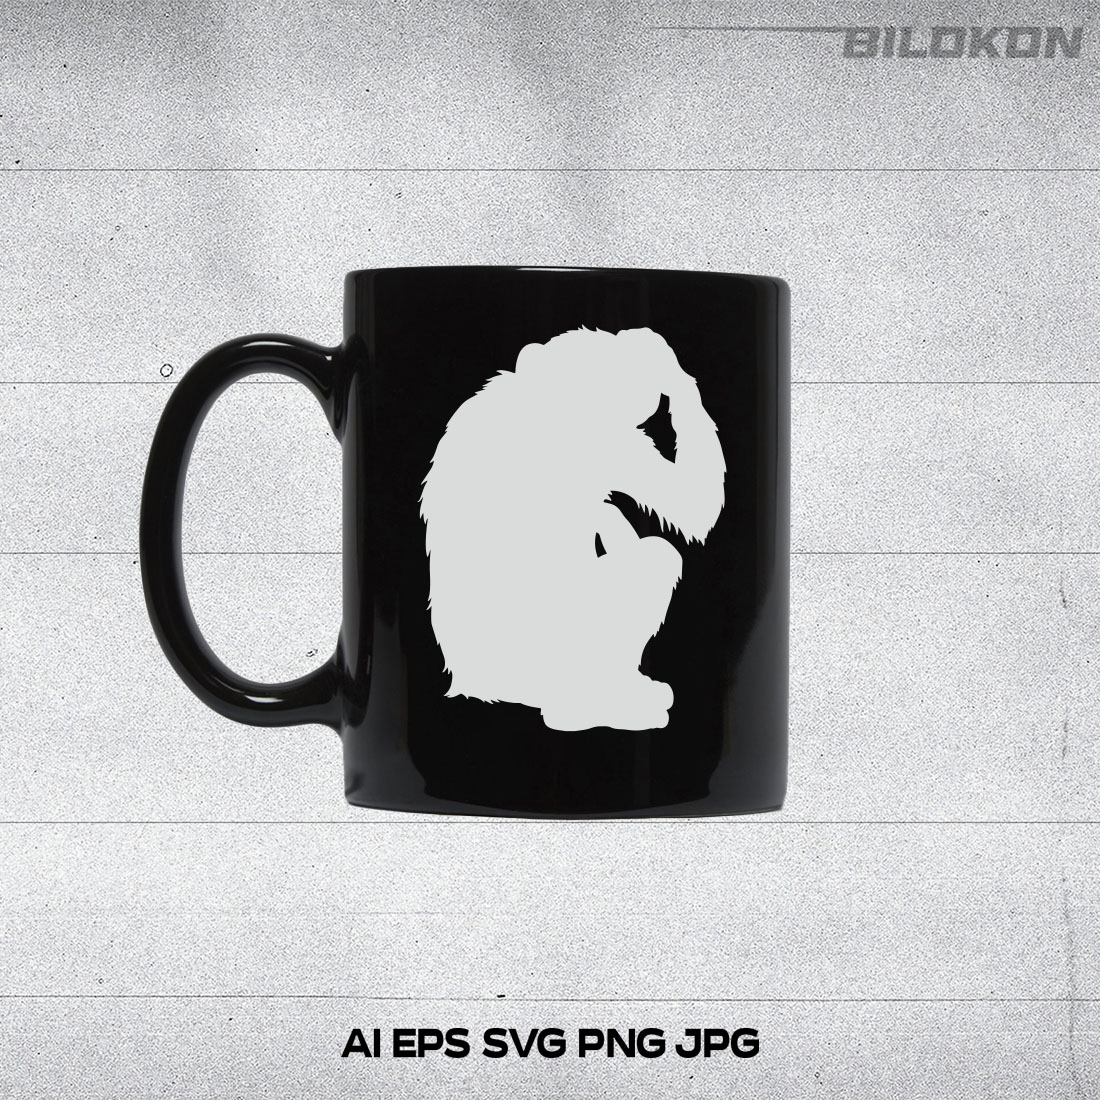 Black coffee mug with a silhouette of a gorilla.